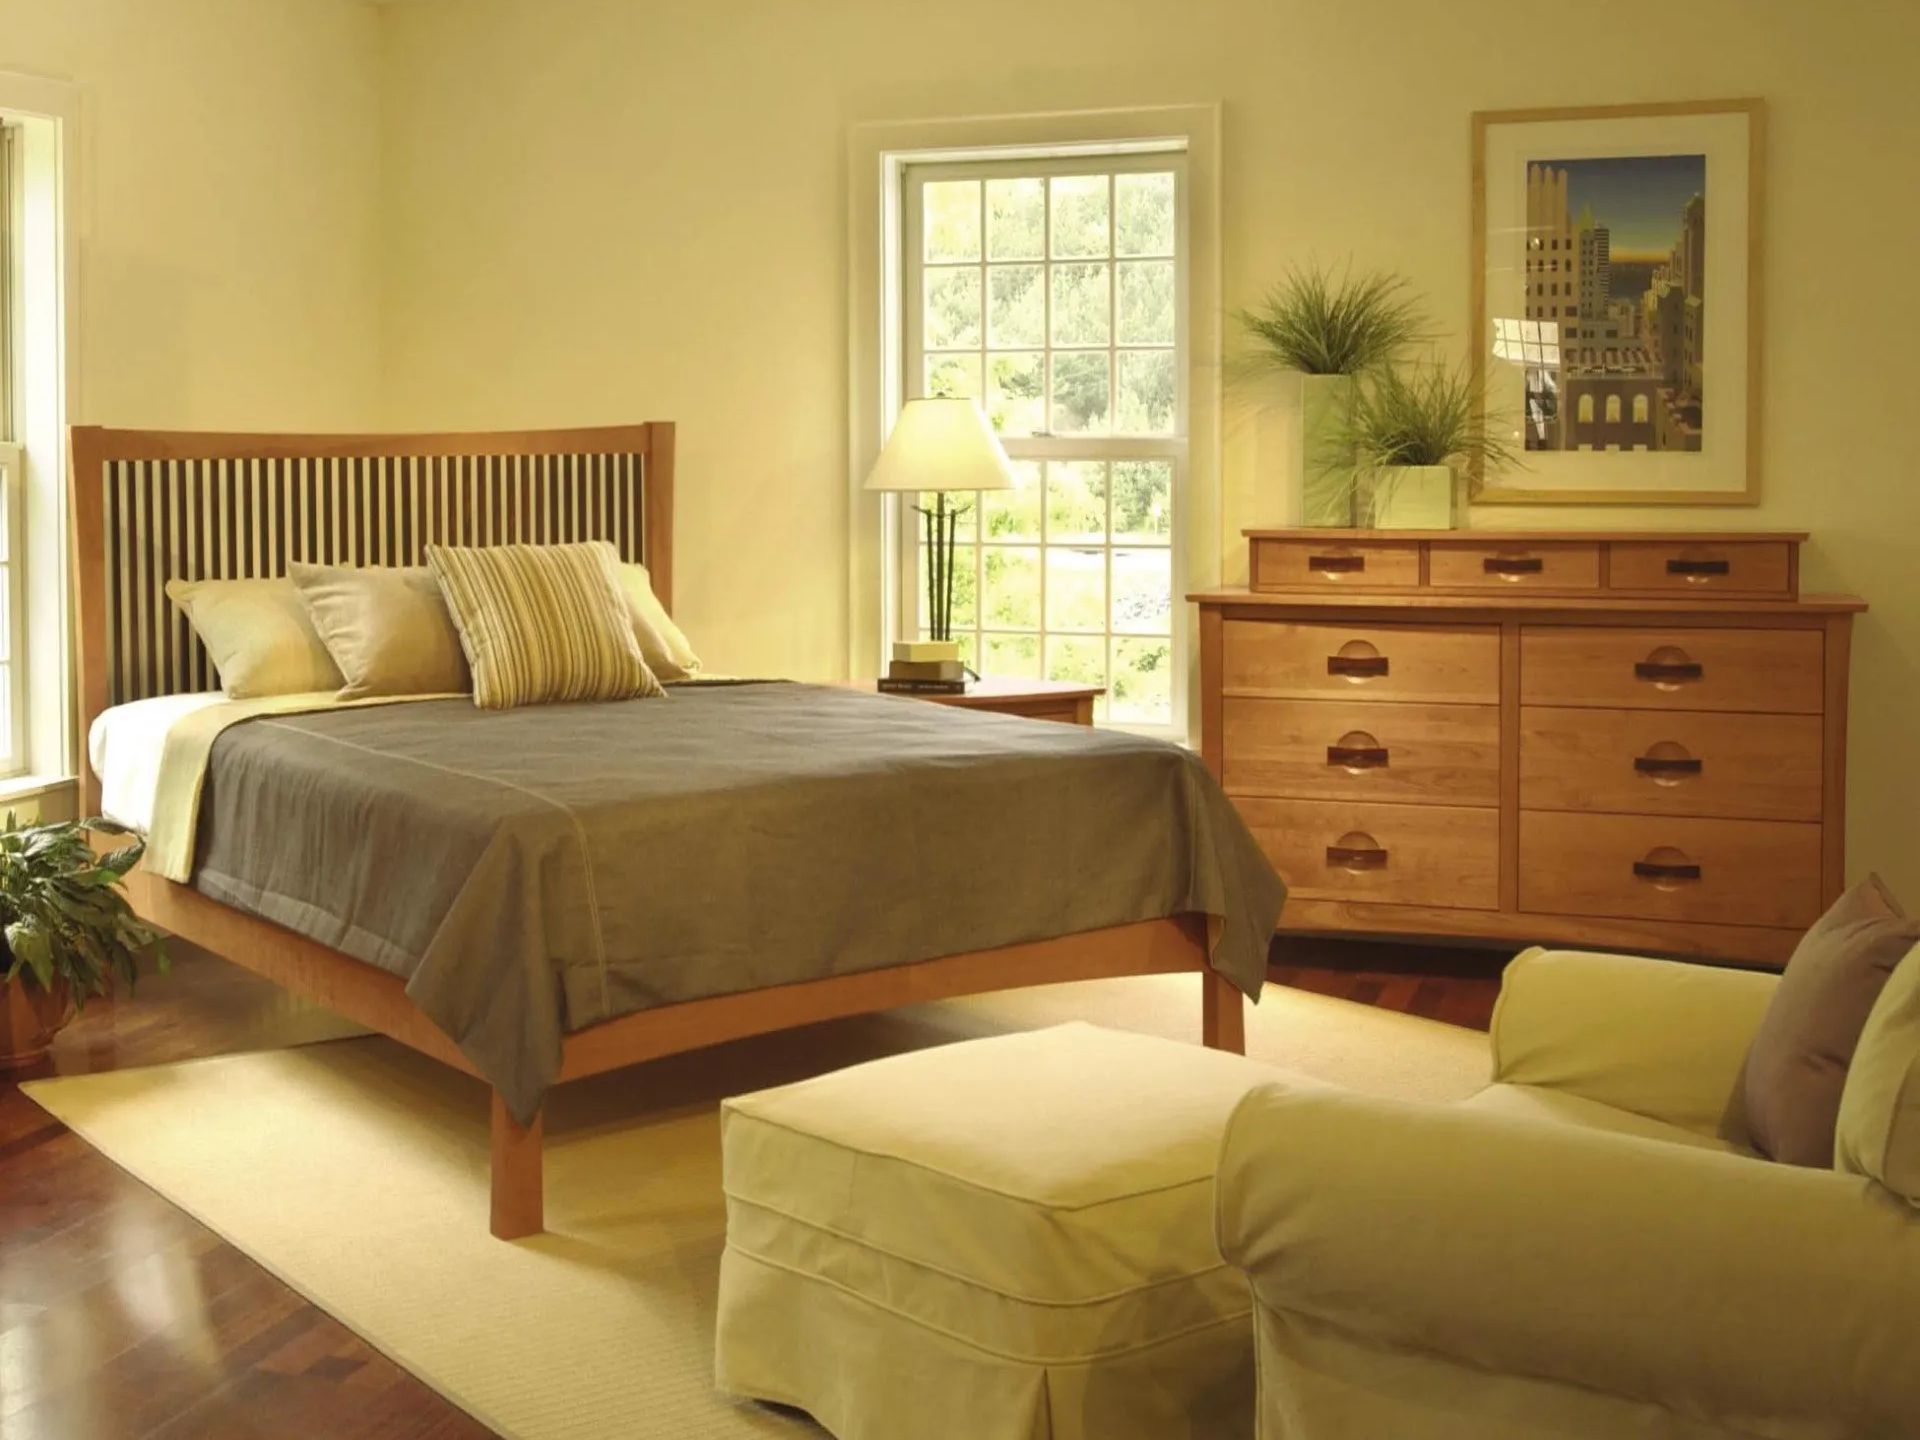 Berkeley Bedroom collection - Viking Trader Furniture Berkeley California